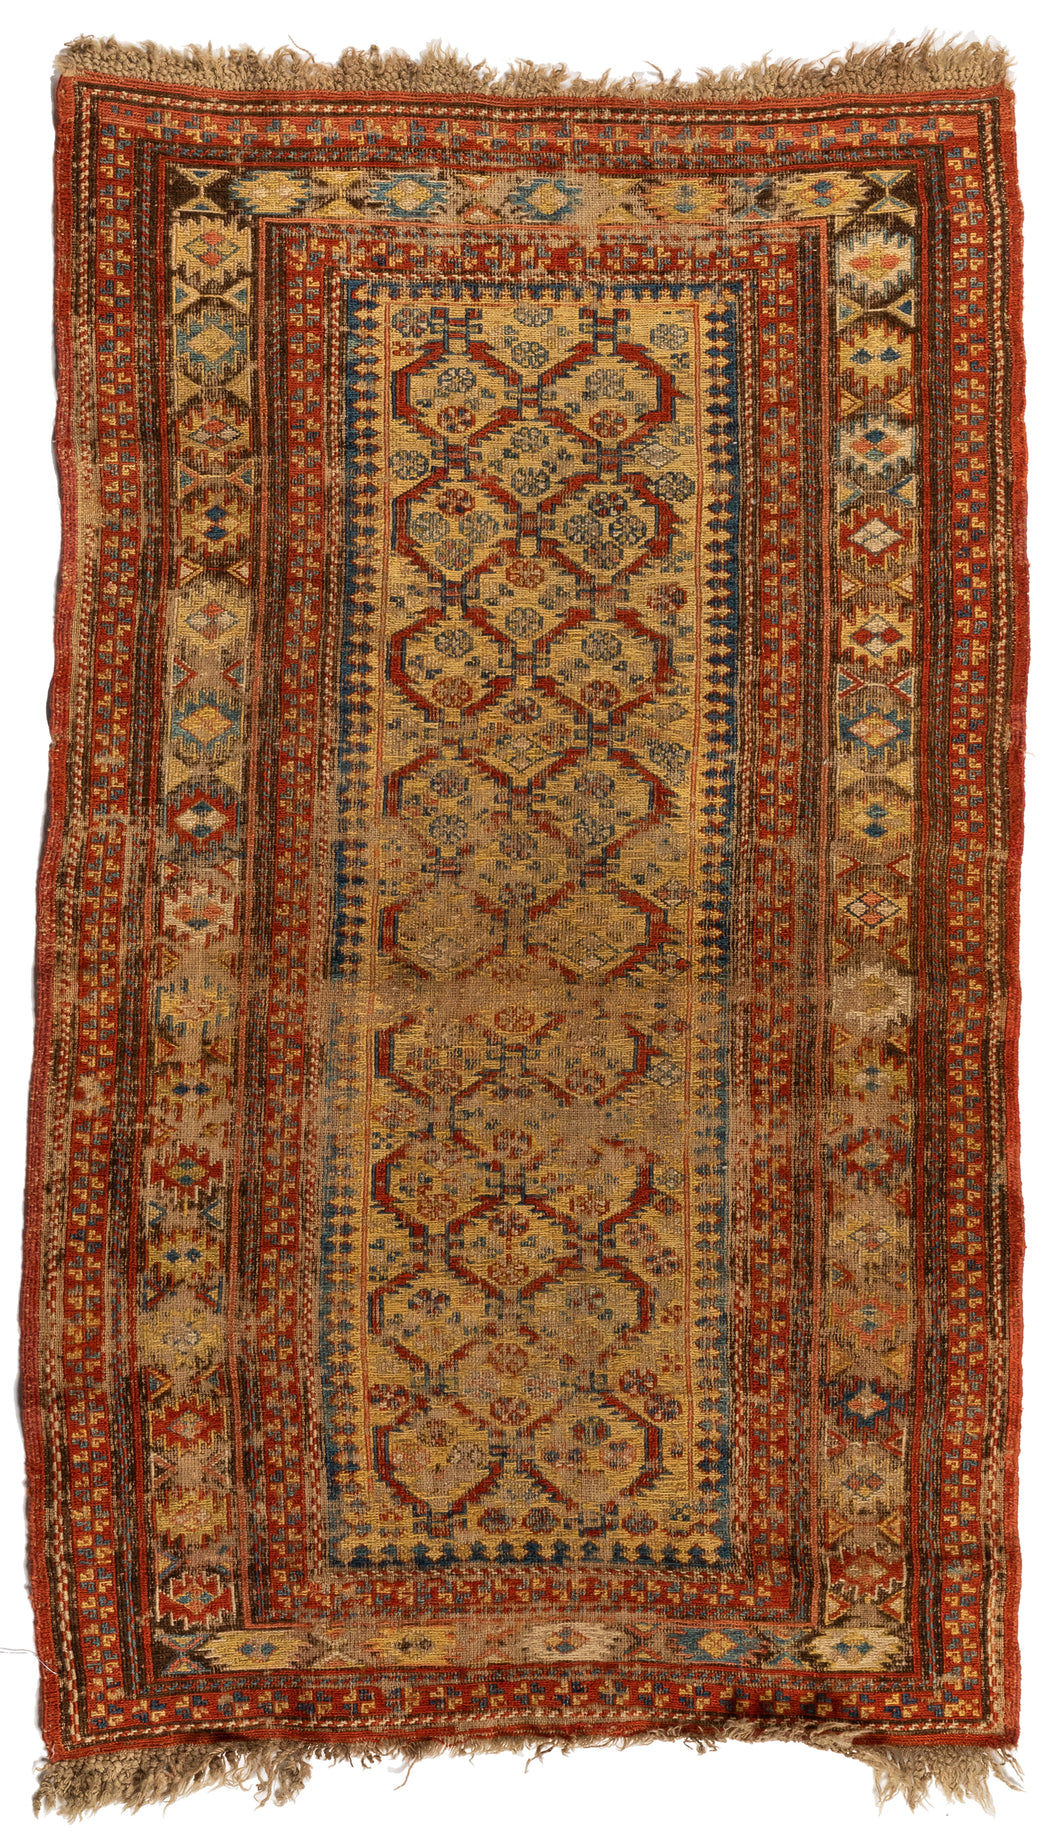 Antique Distressed Soumak Carpet